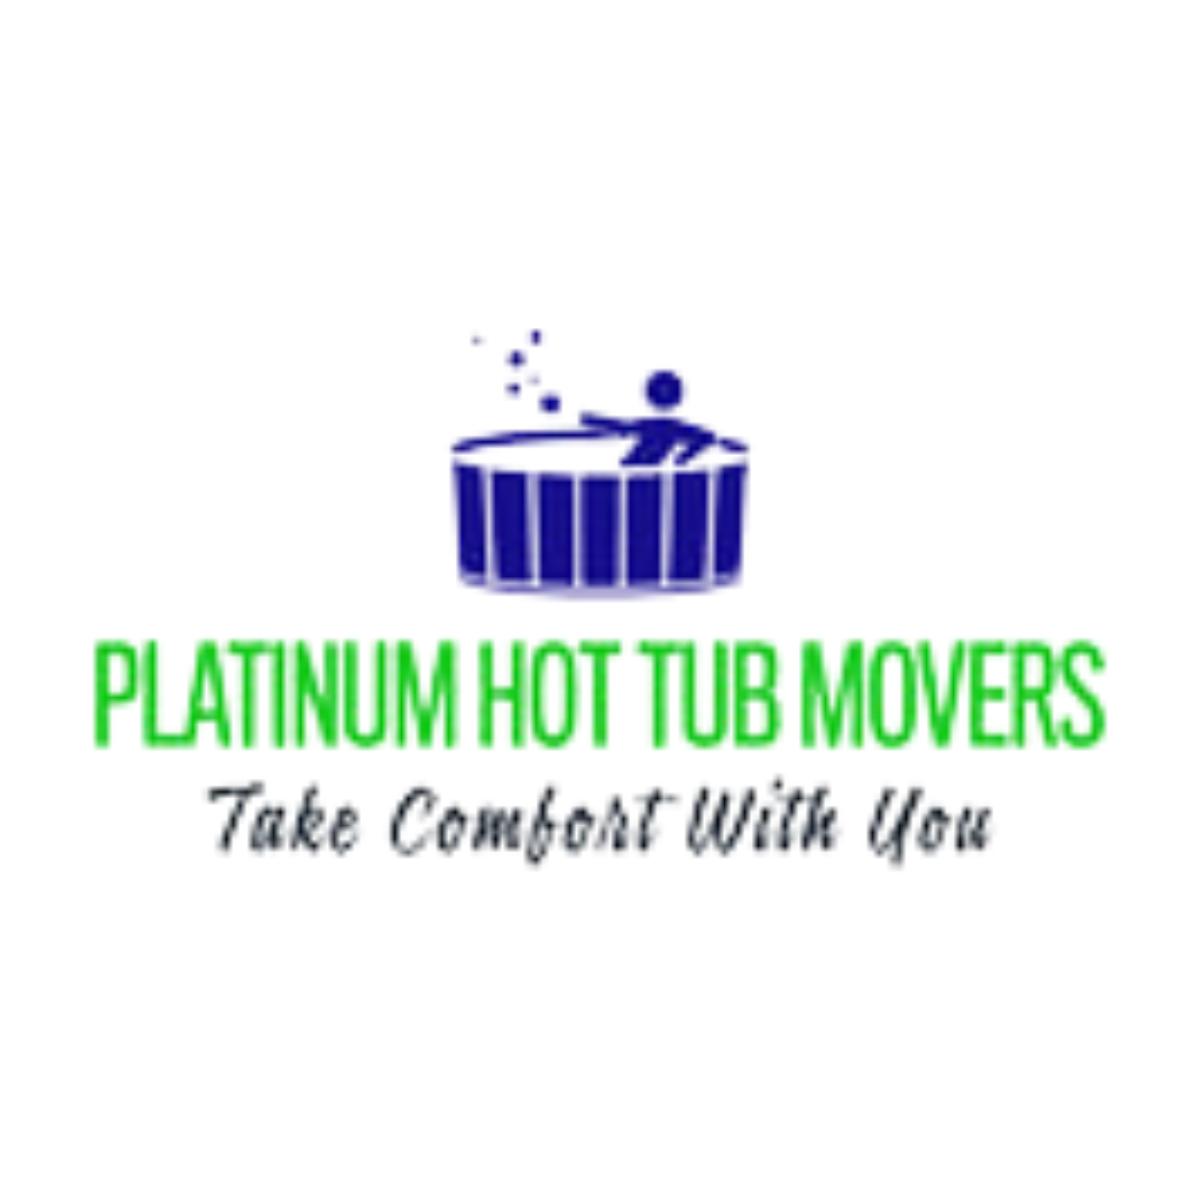 Platinum Hot Tub Movers, LLC